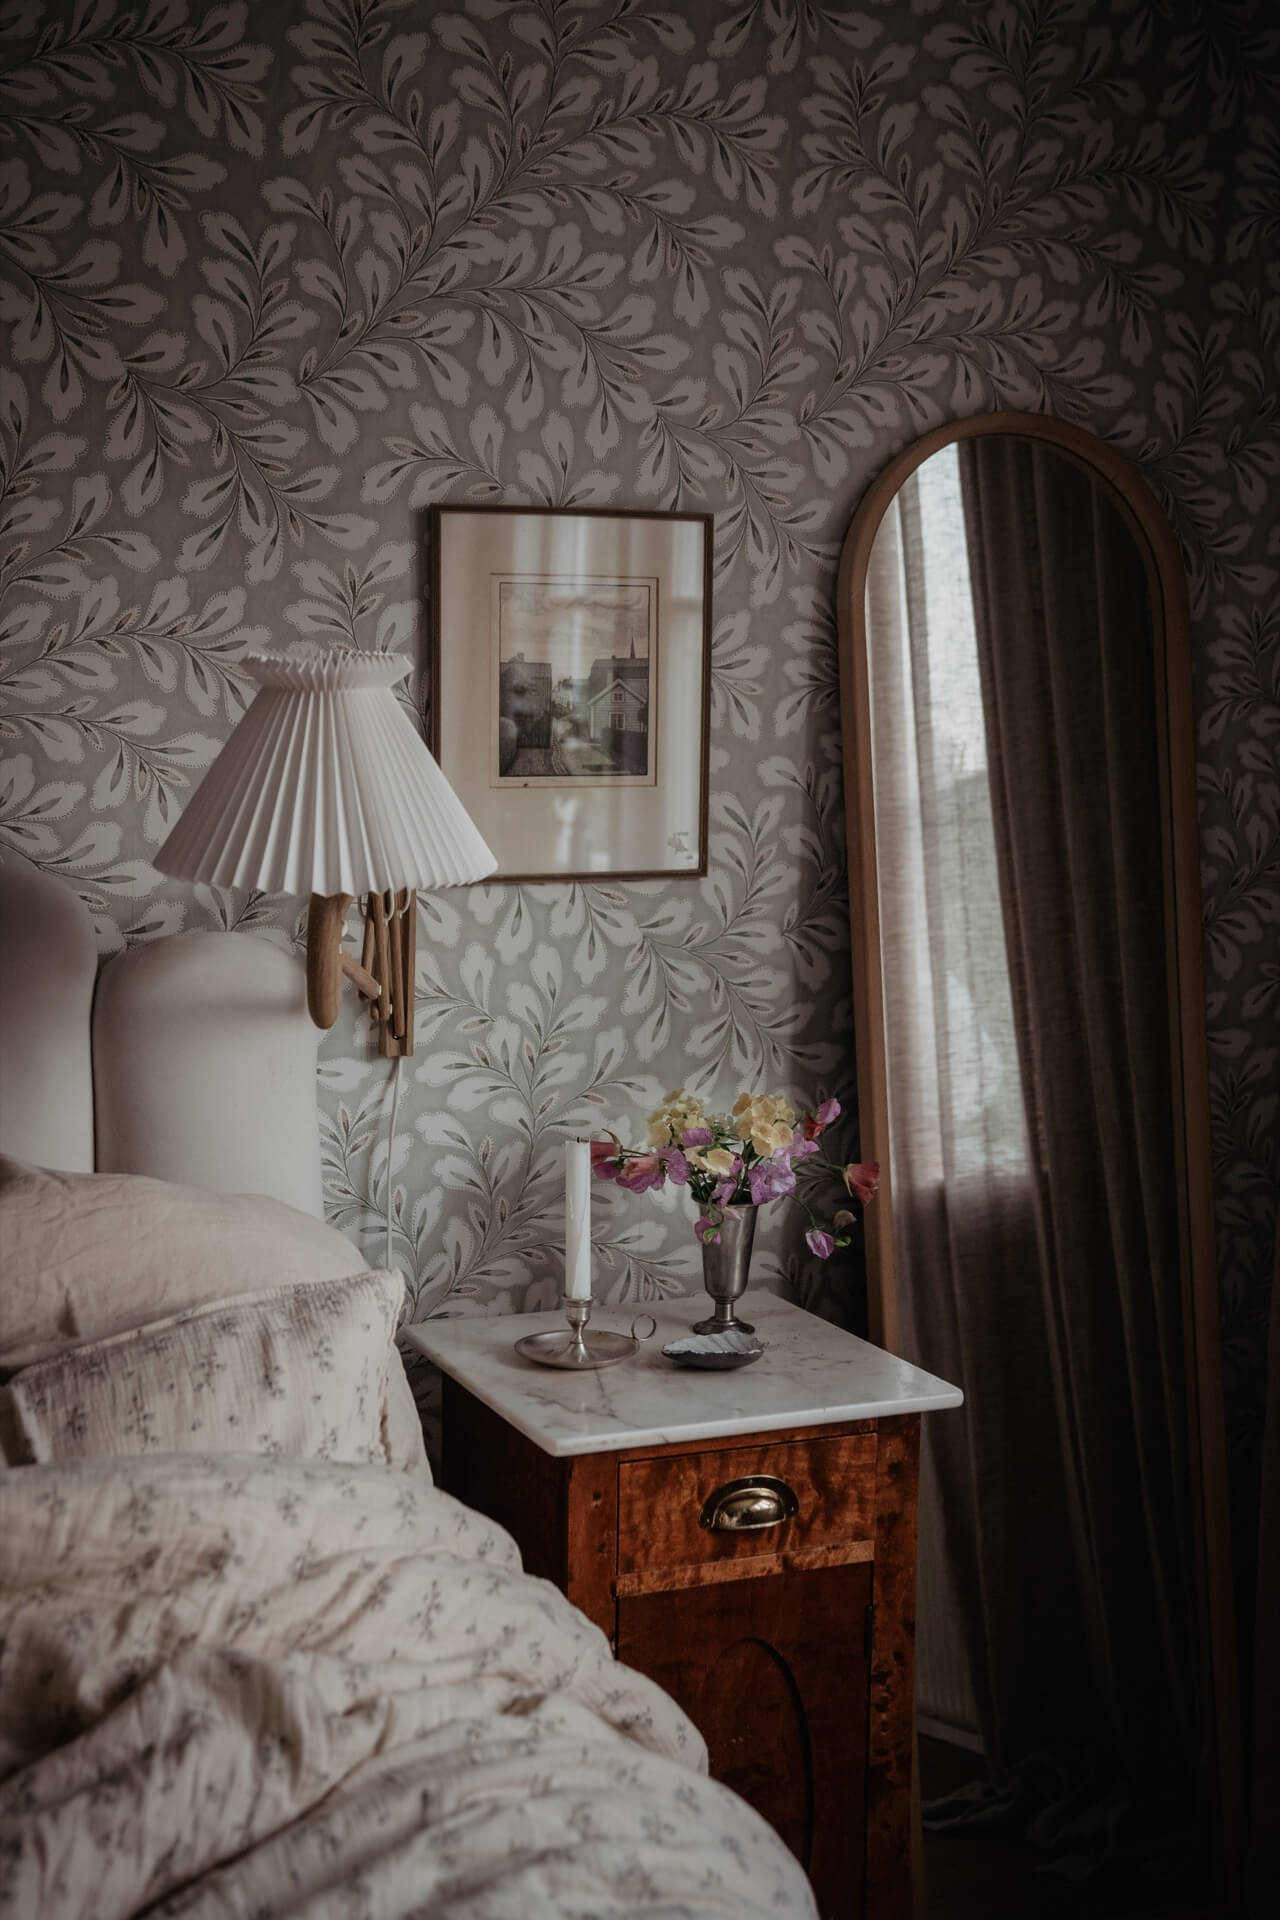 Emelie Sundberg home tour - interior of Swedish home - bedroom